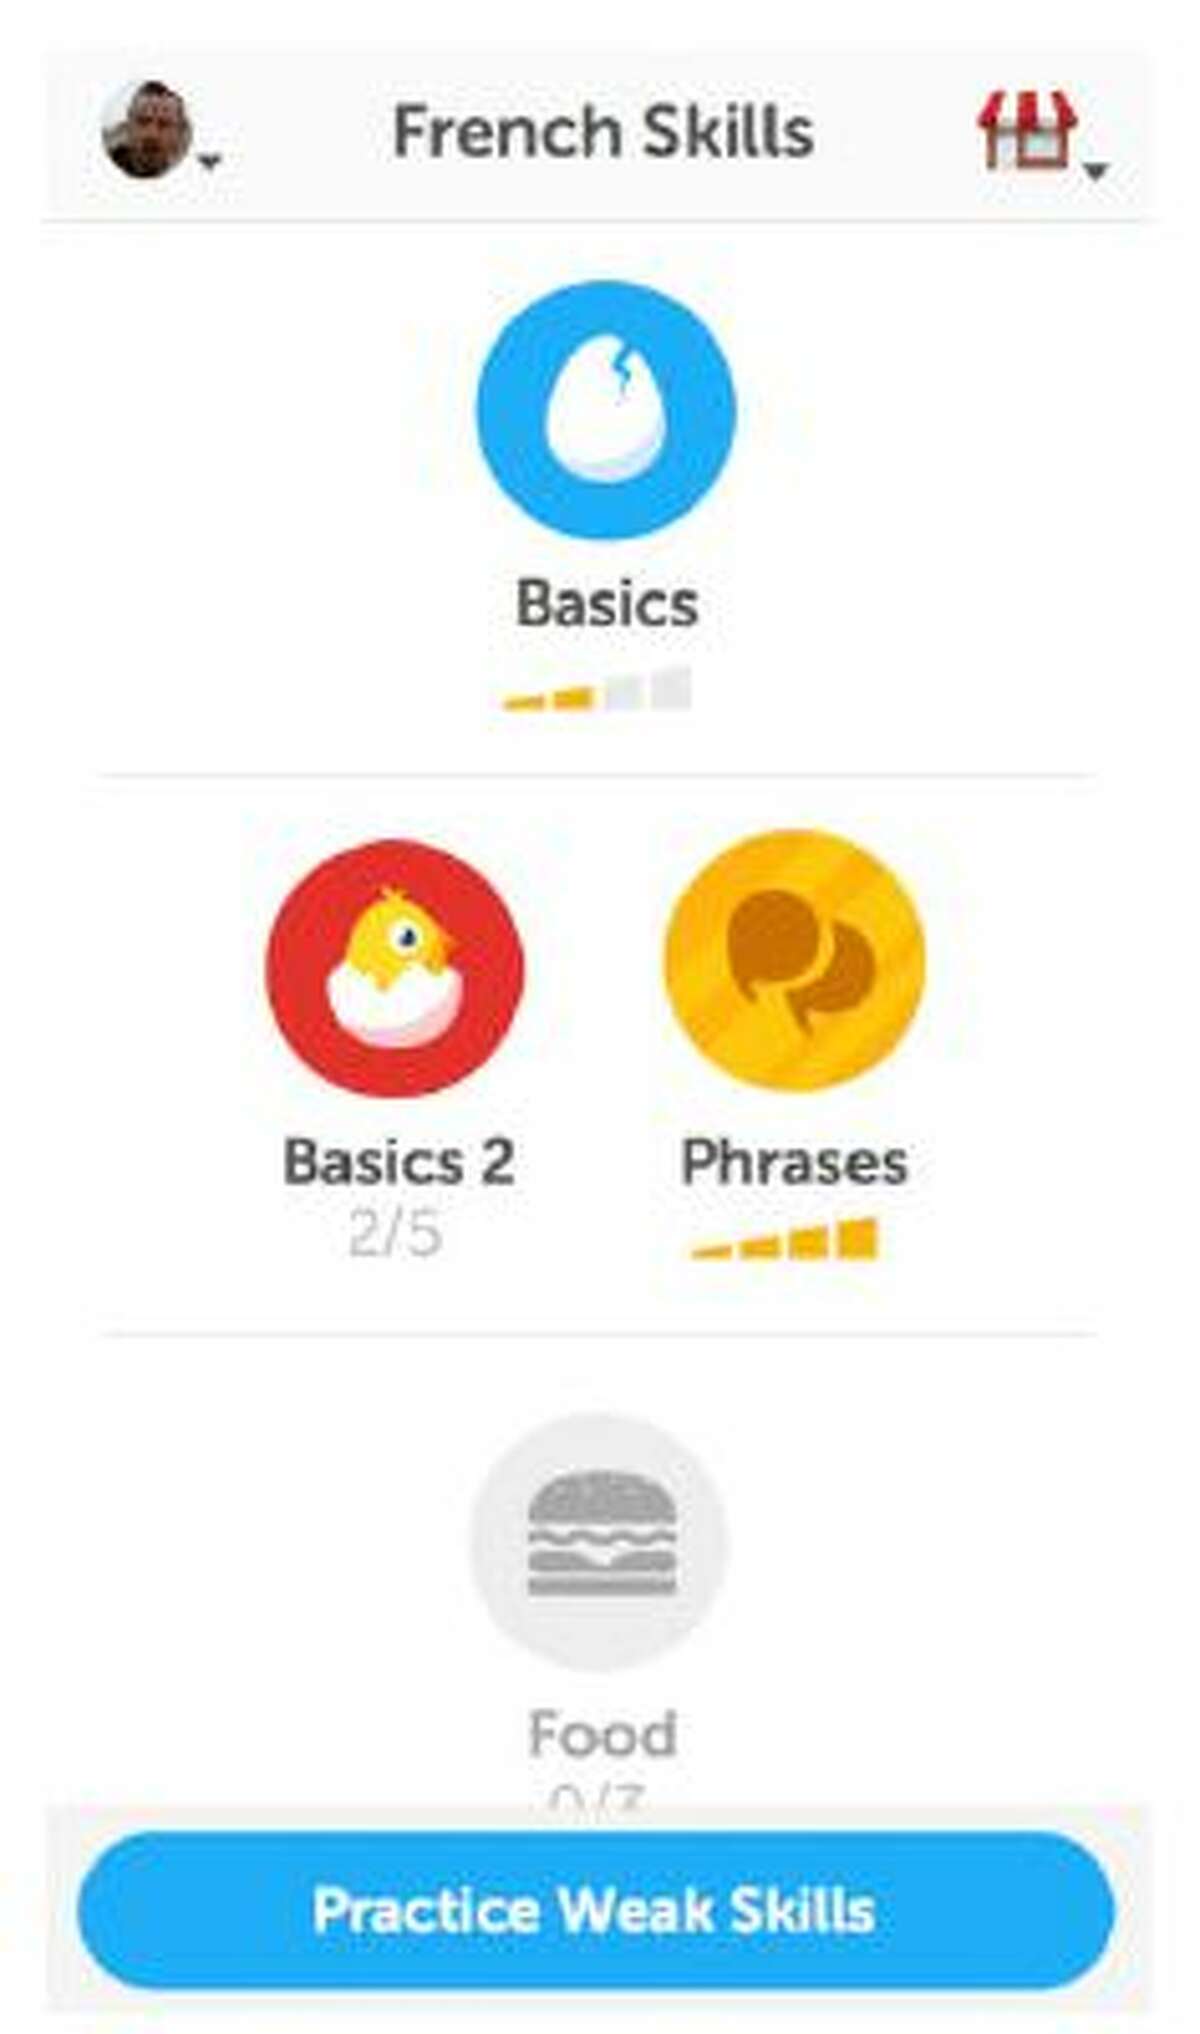 How do I use classroom Leaderboards? – Duolingo for Schools